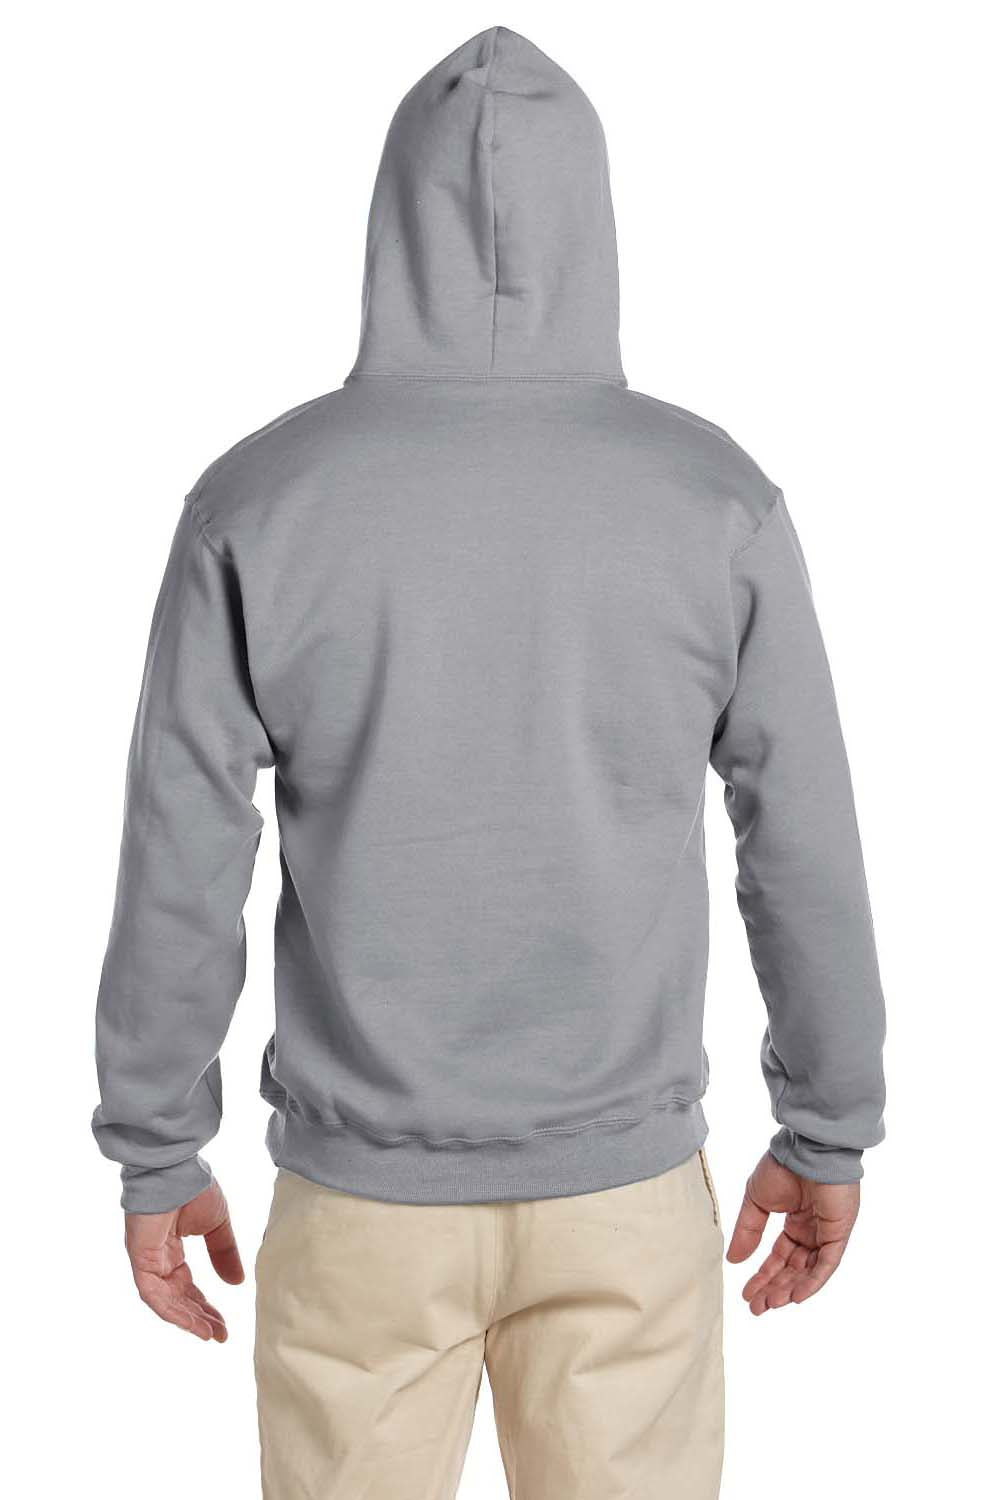 Jerzees 4997 Mens Super Sweats NuBlend Fleece Hooded Sweatshirt Hoodie Oxford Grey Back